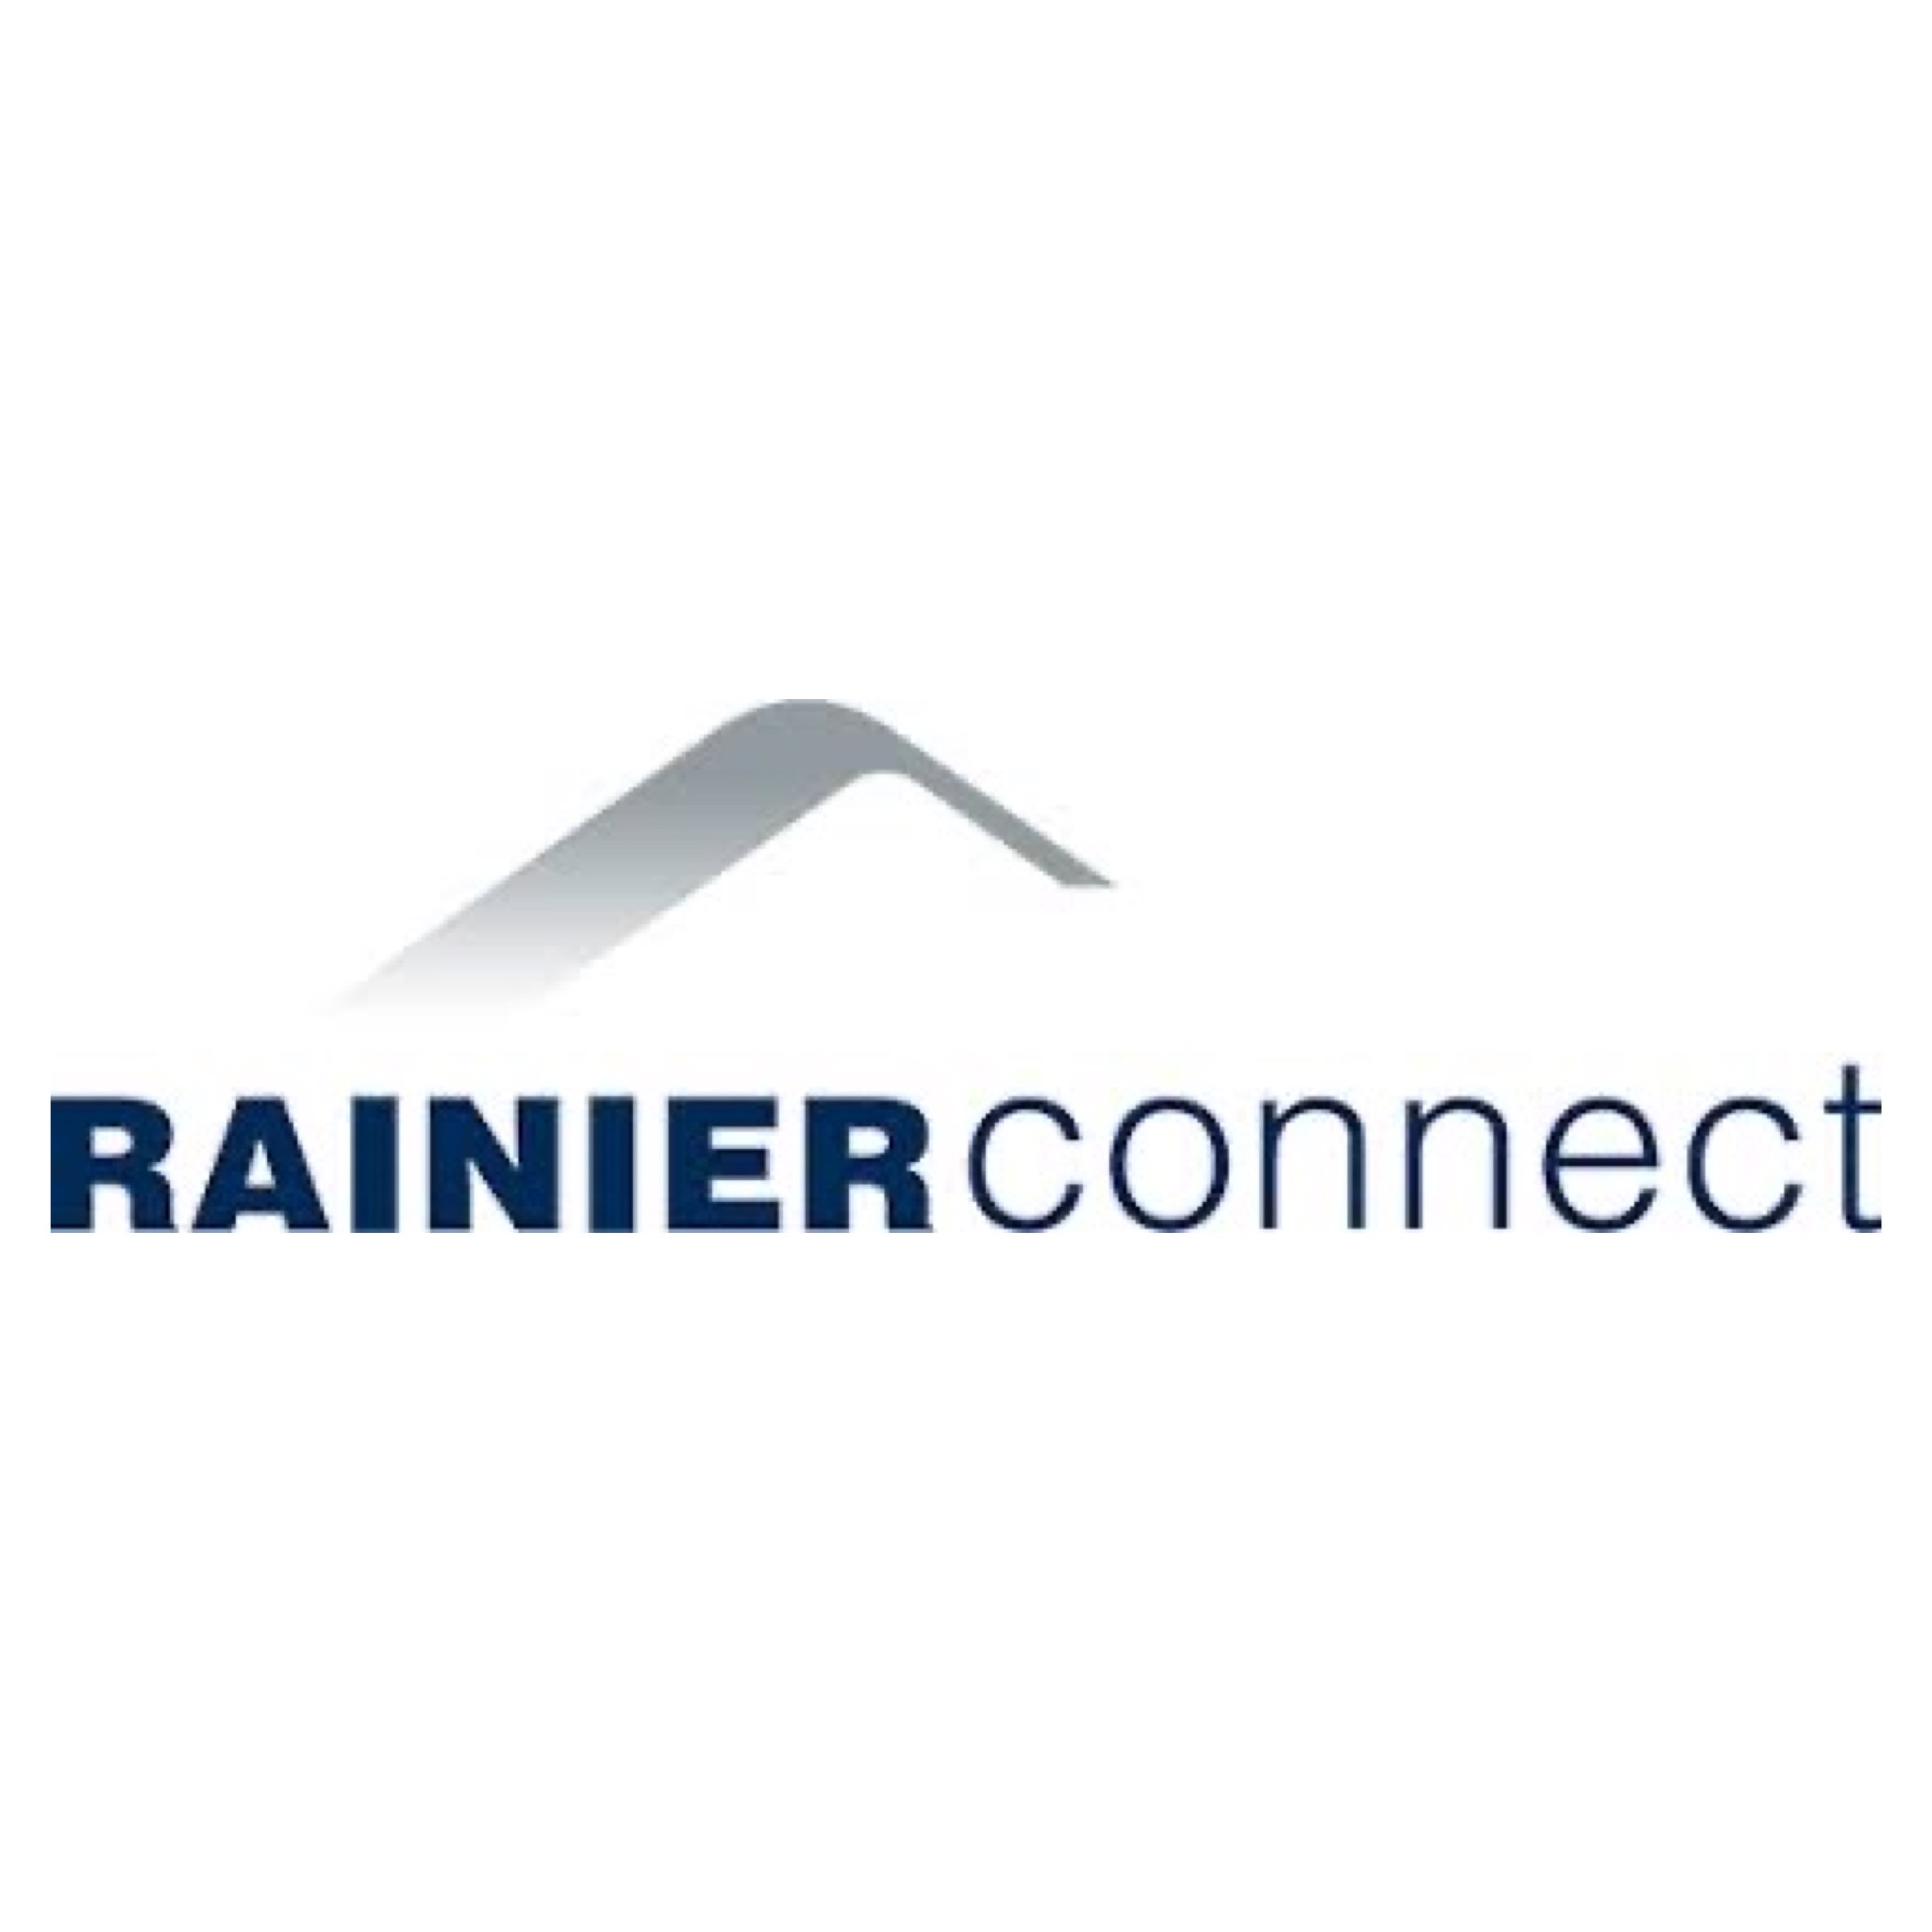 RAINIER CONNECT